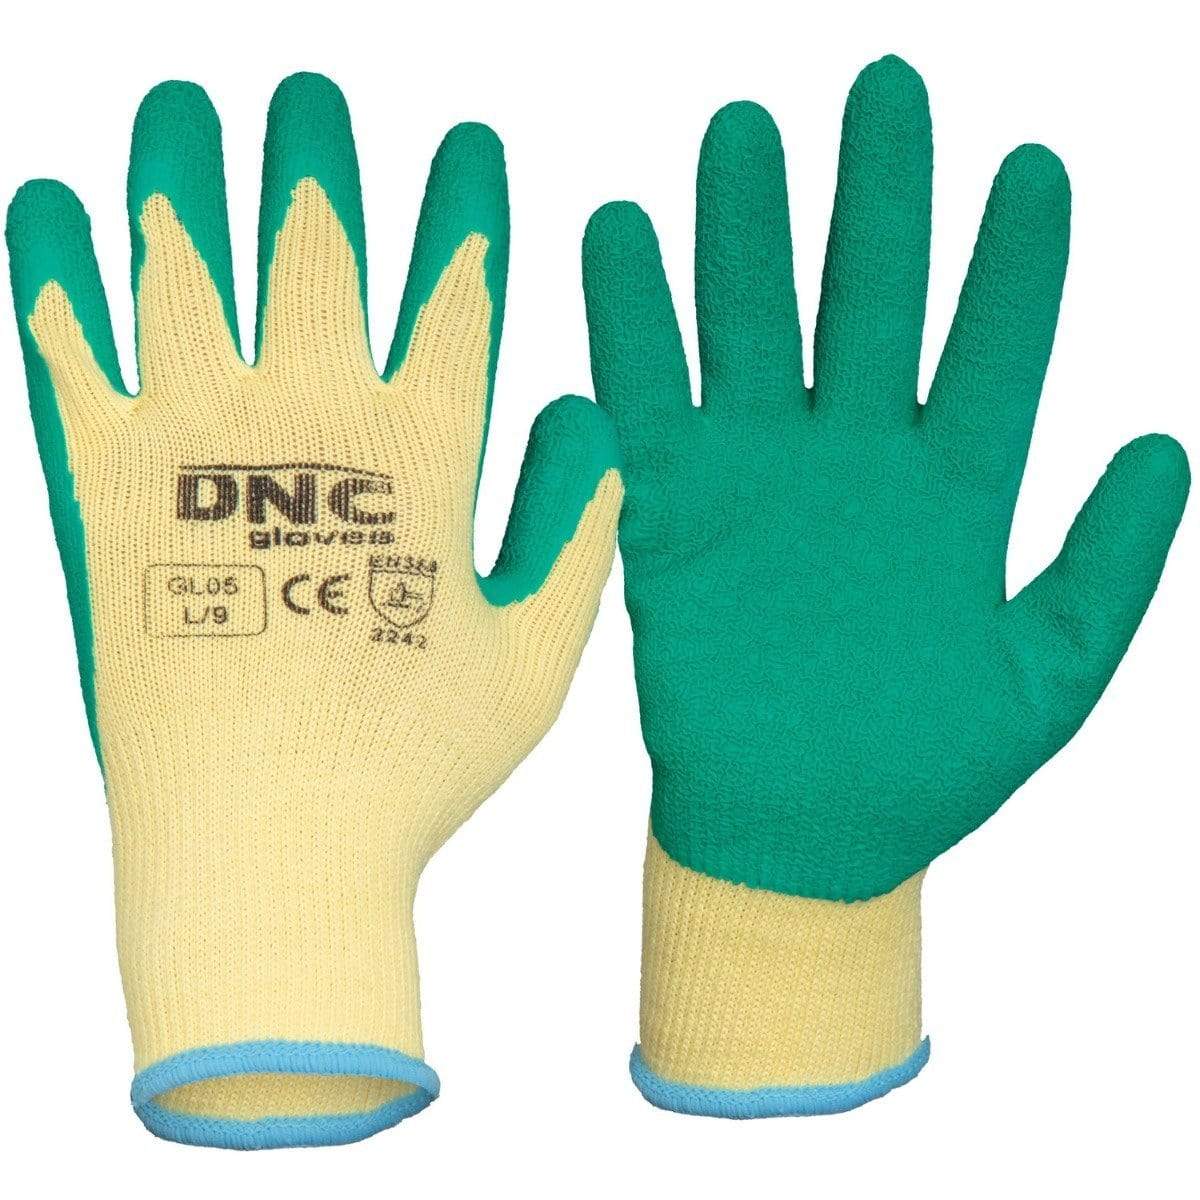 DNC Workwear PPE Green/Natural / S/7 DNC WORKWEAR Latex- Premium GL05